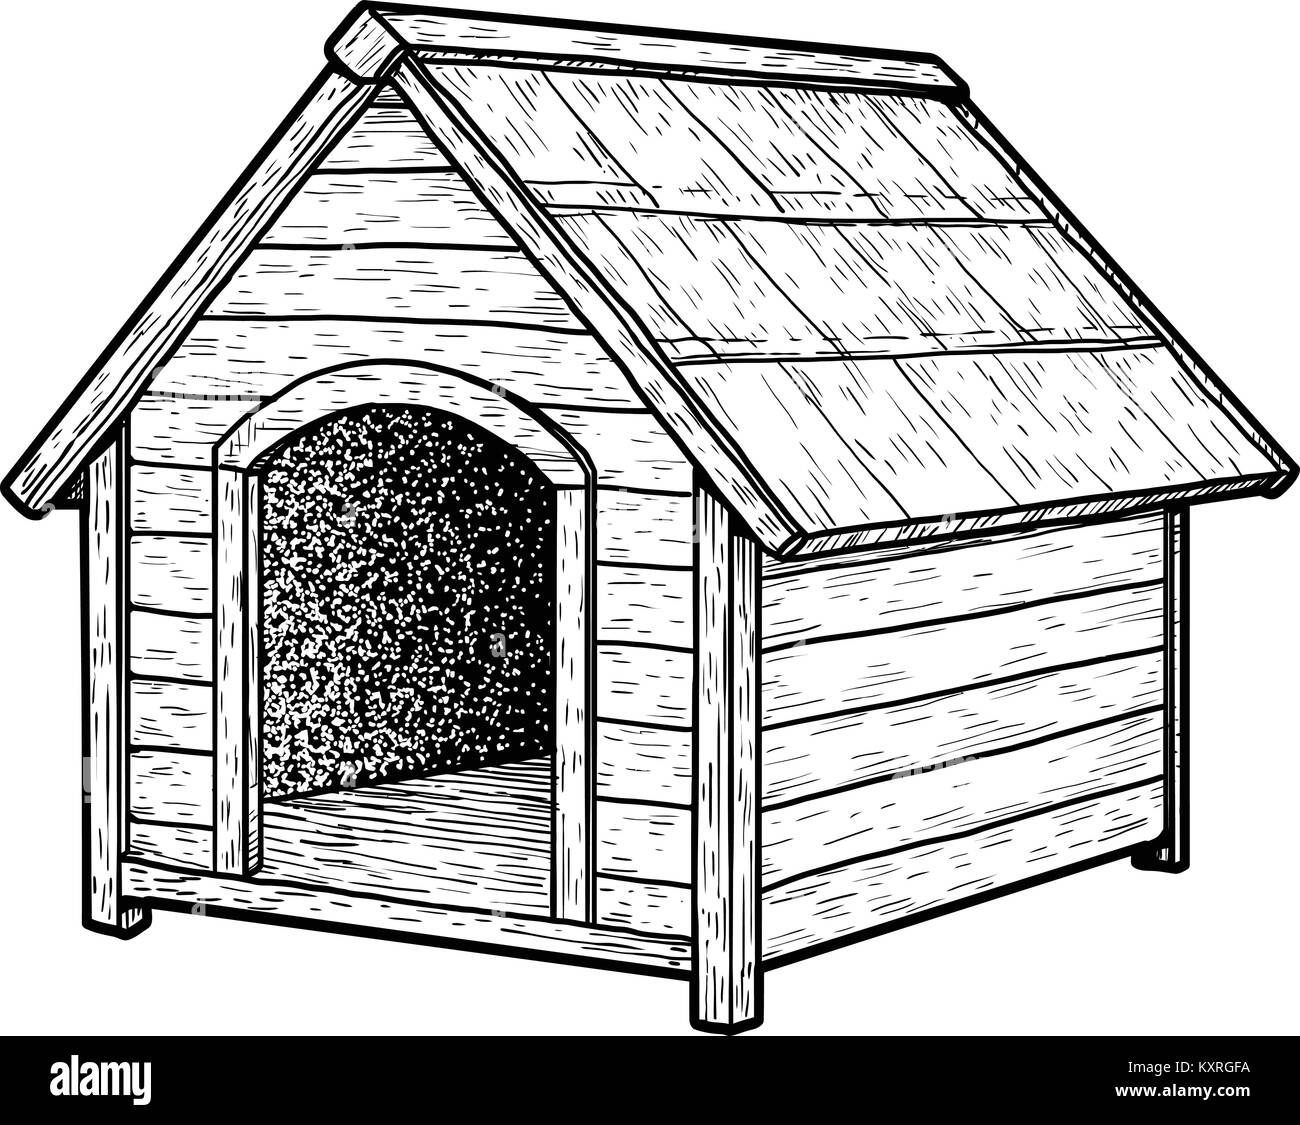 Dog house illustration, drawing, engraving, ink, line art, vector ...